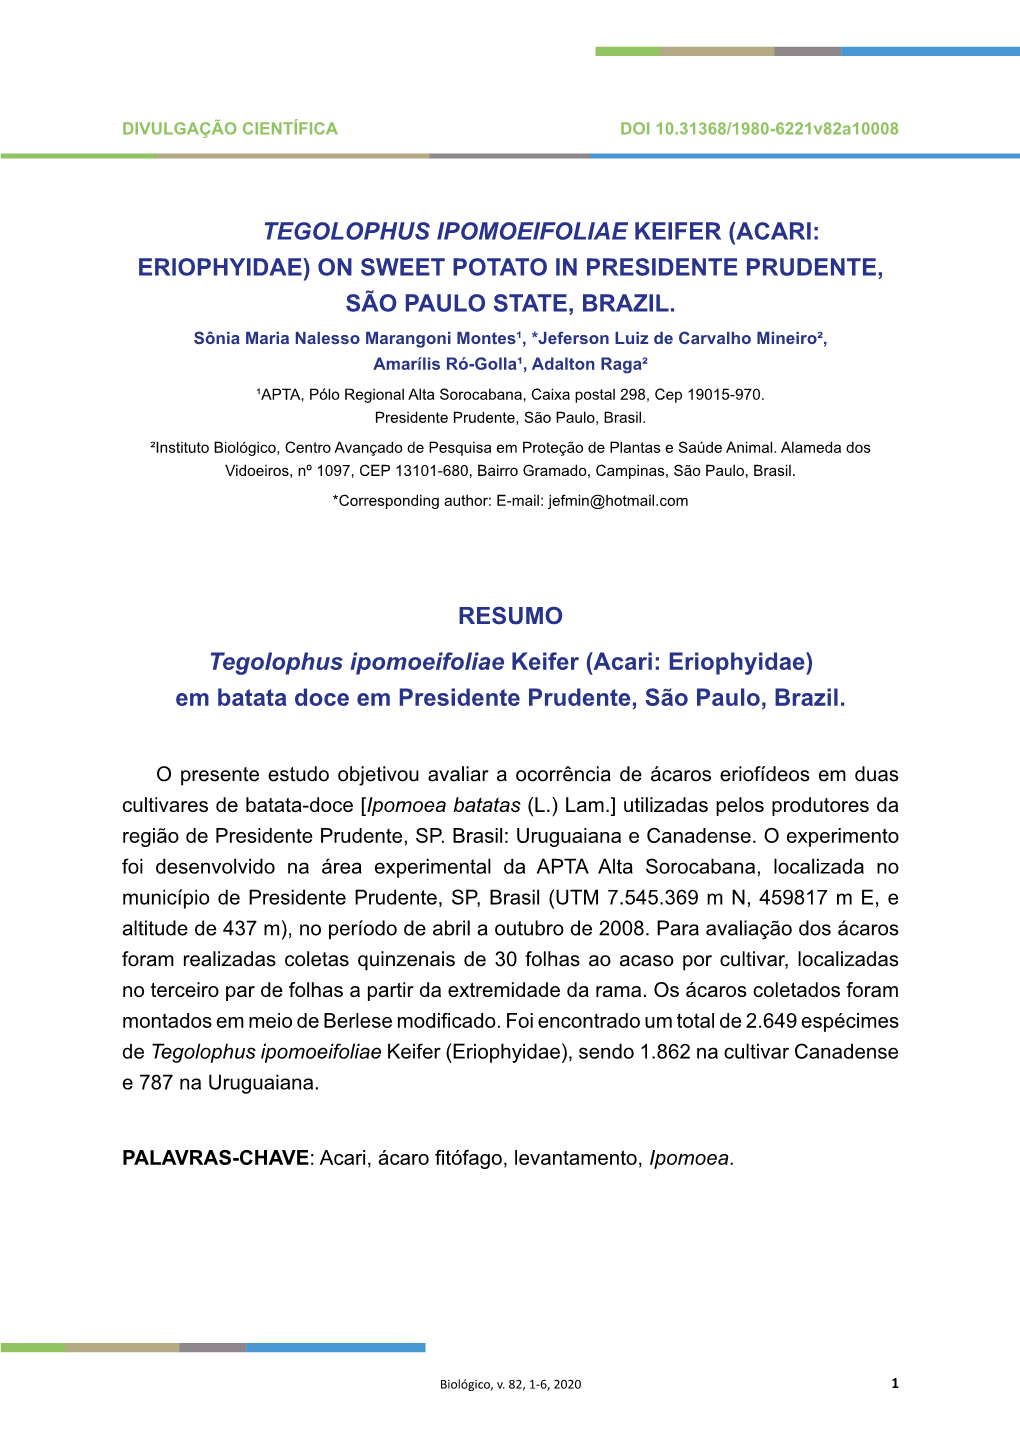 Acari: Eriophyidae) on Sweet Potato in Presidente Prudente, São Paulo State, Brazil